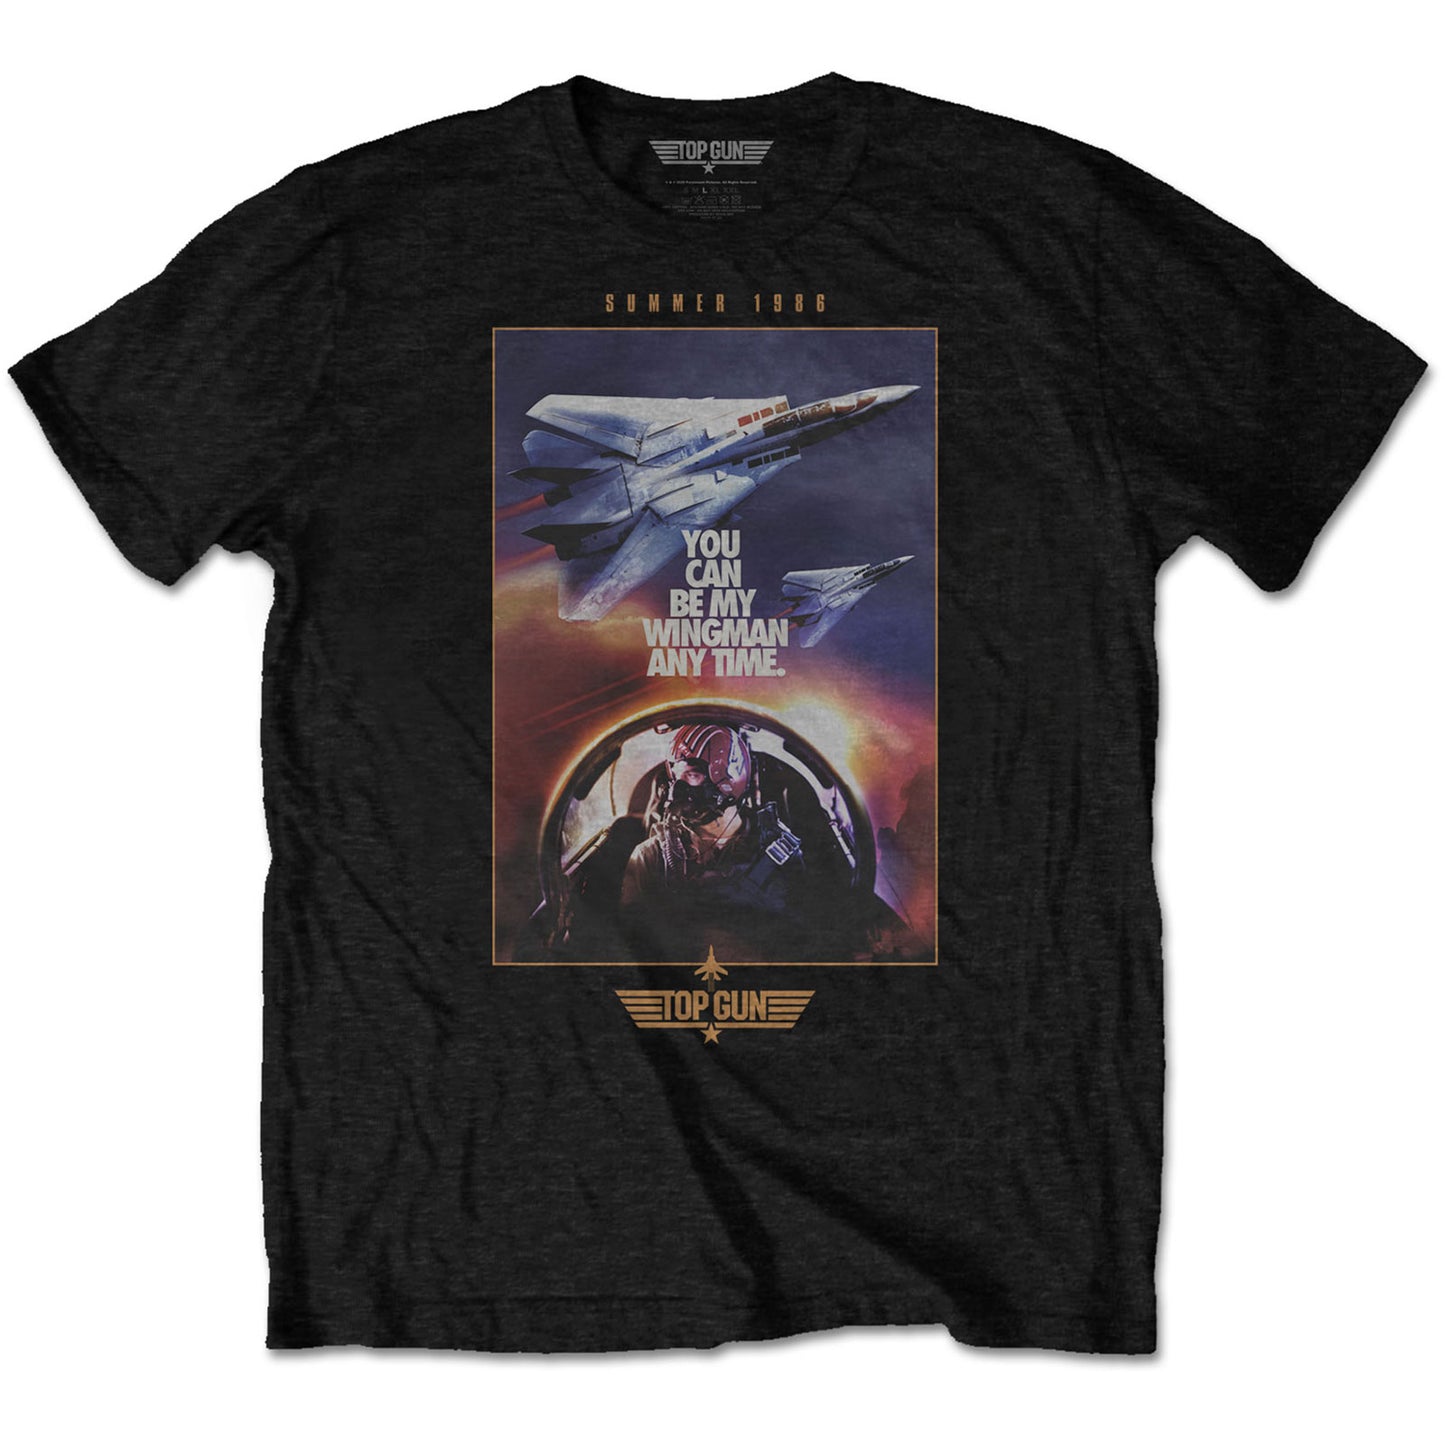 Top Gun T-Shirt: Wingman Poster